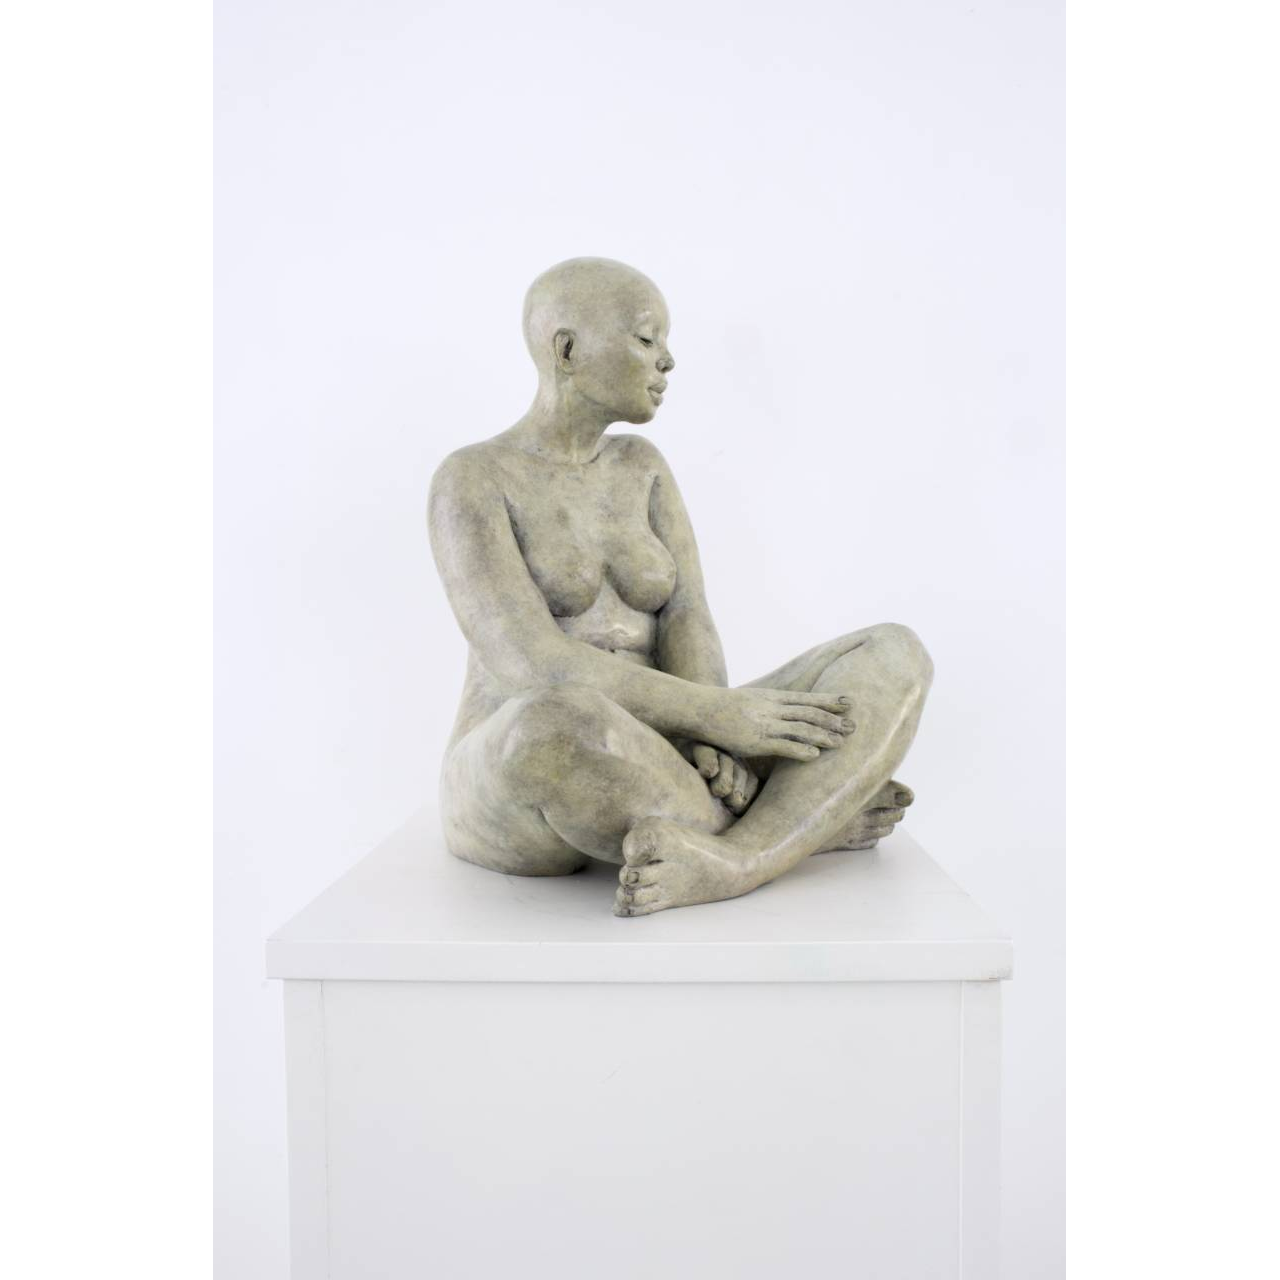 Claude JUSTAMON, Plénitude, Bronze, patiné, 40 x 32 x 28 cm